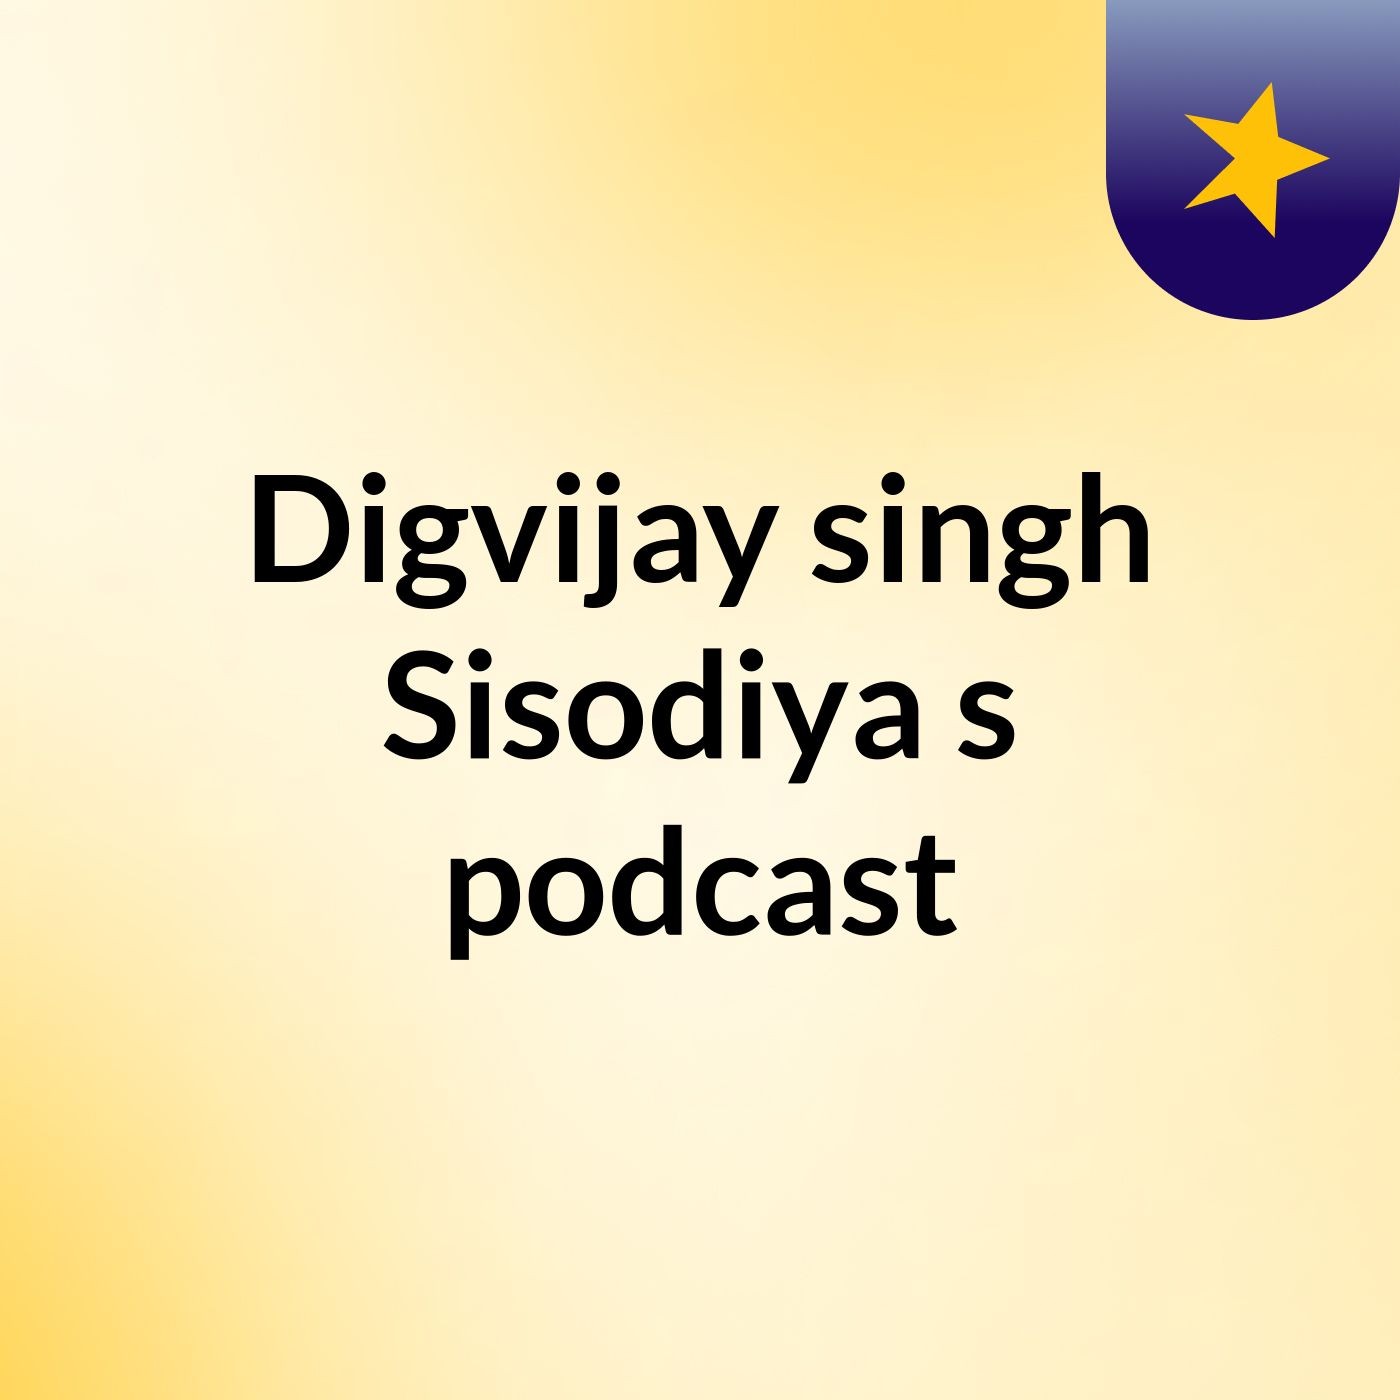 Episode 3 - Digvijay singh Sisodiya's podcast